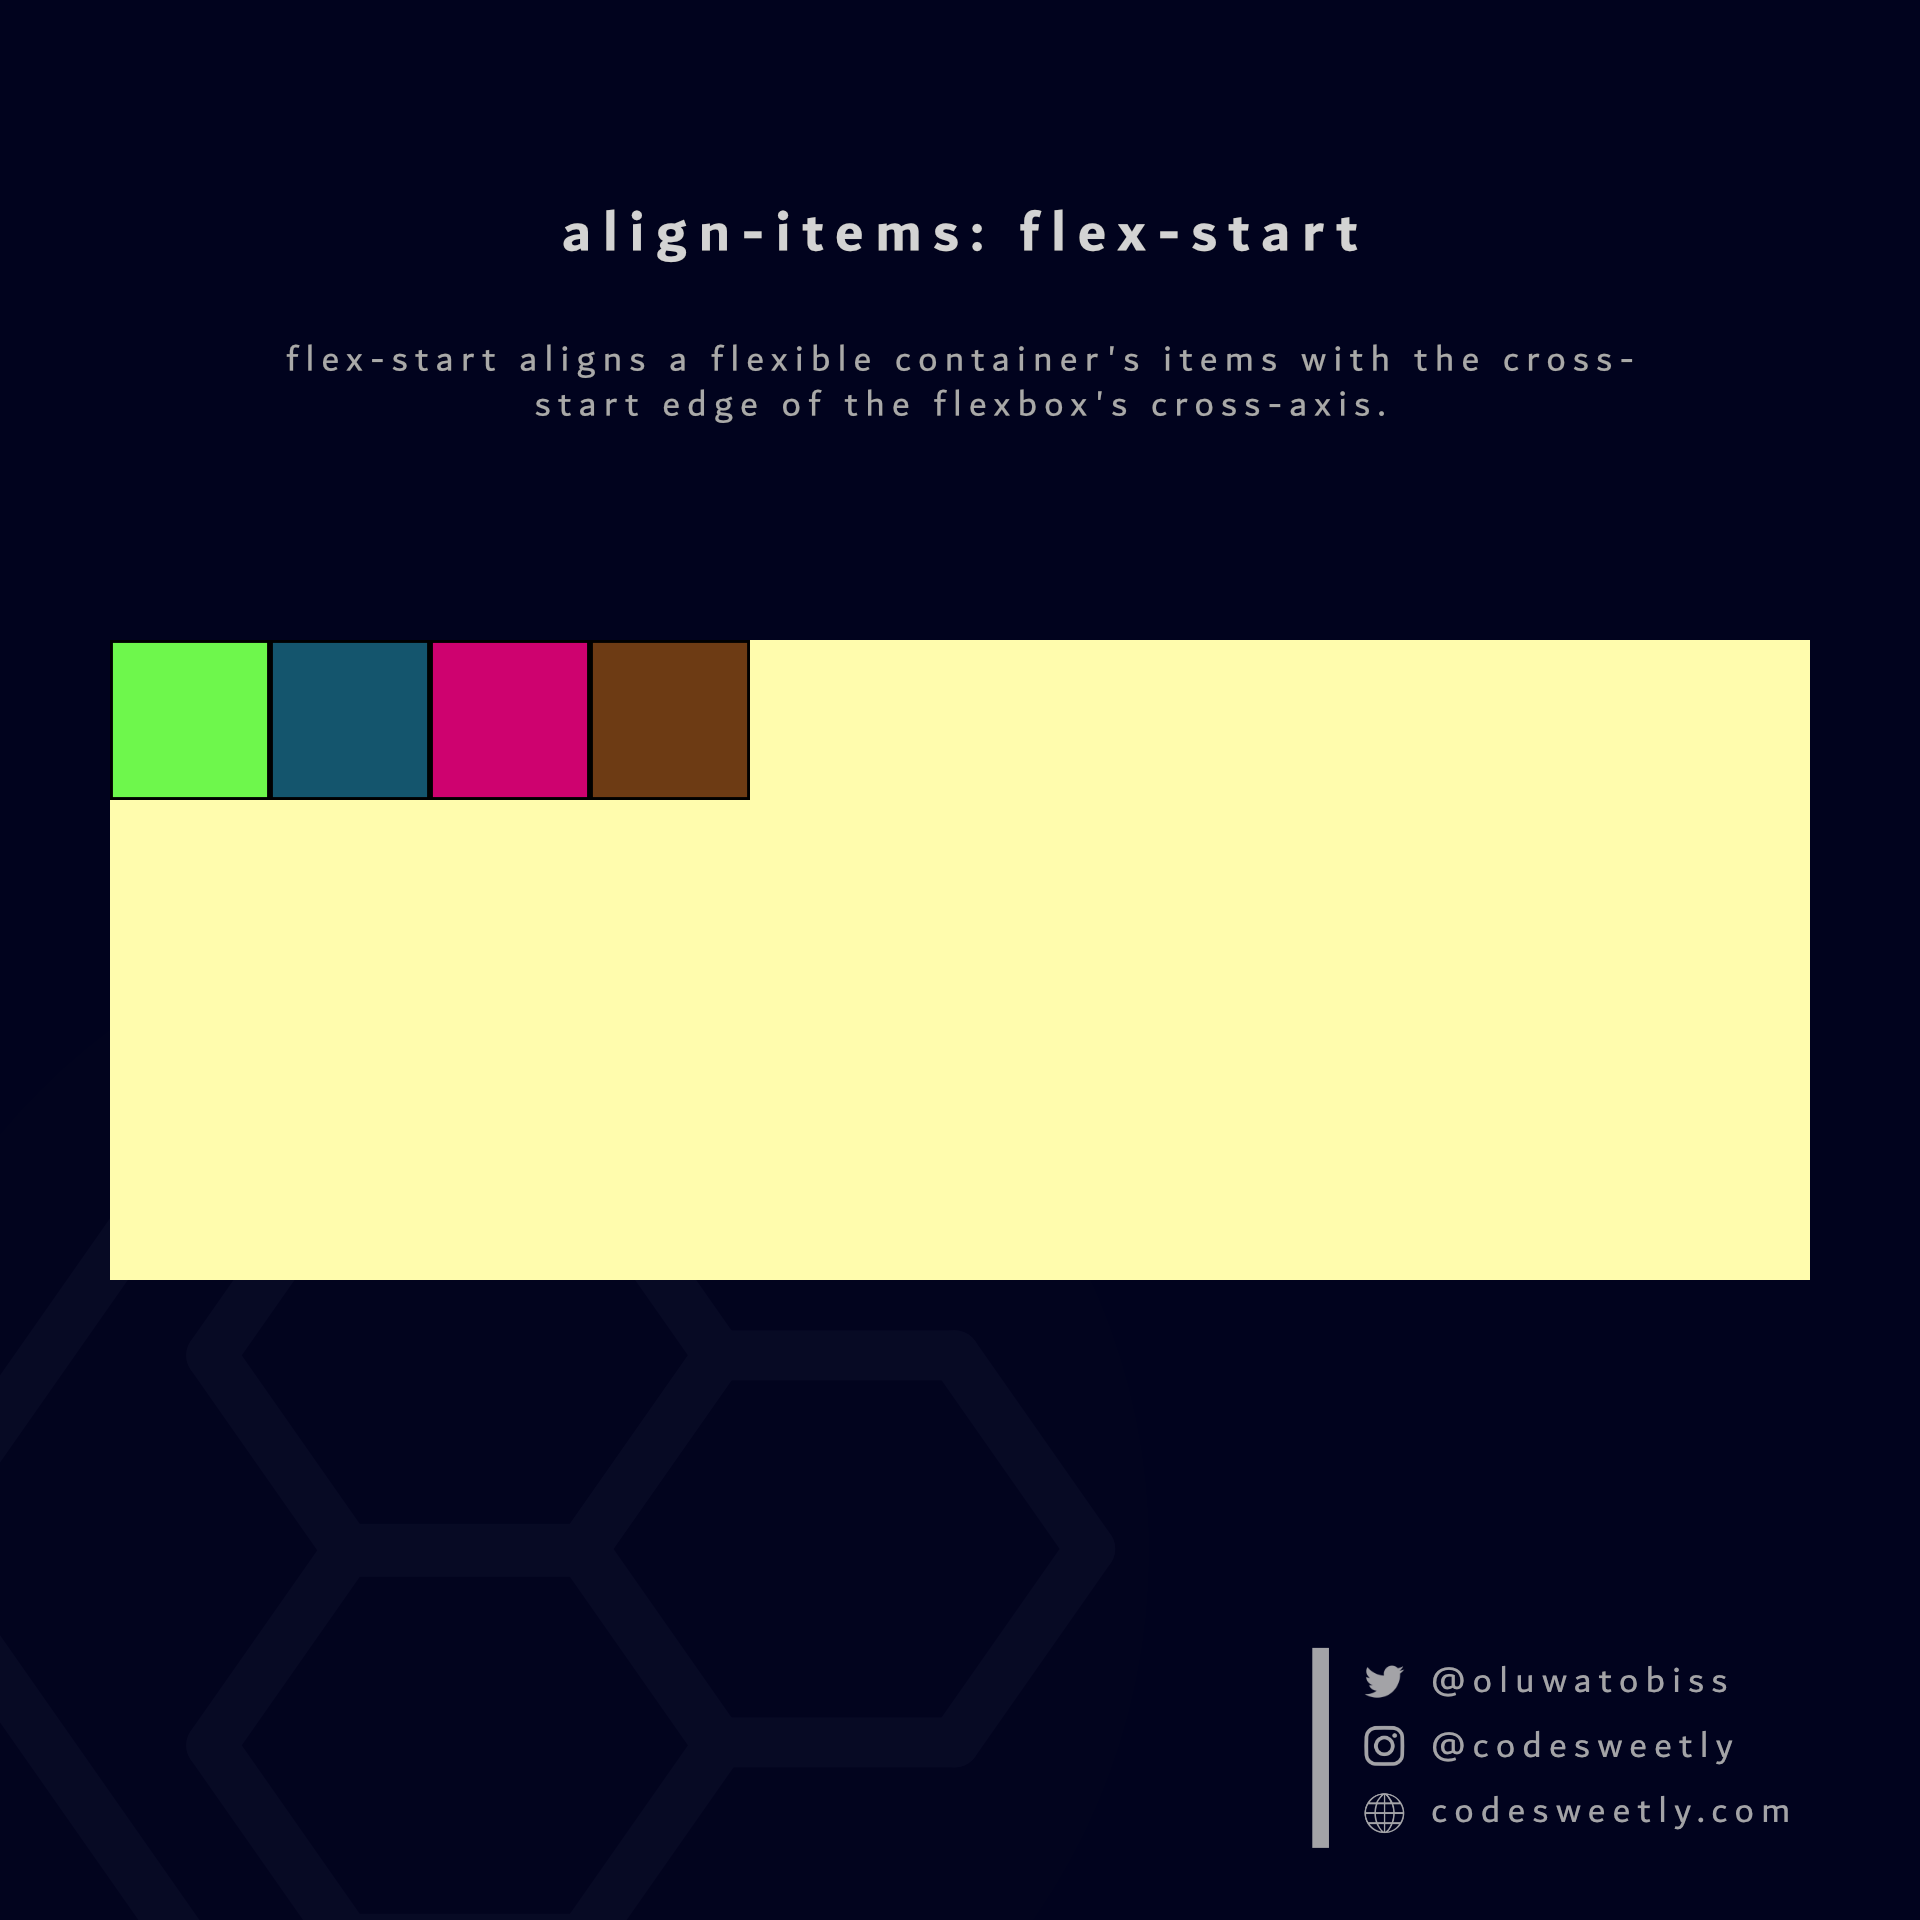 Illustration of align-items' flex-start value